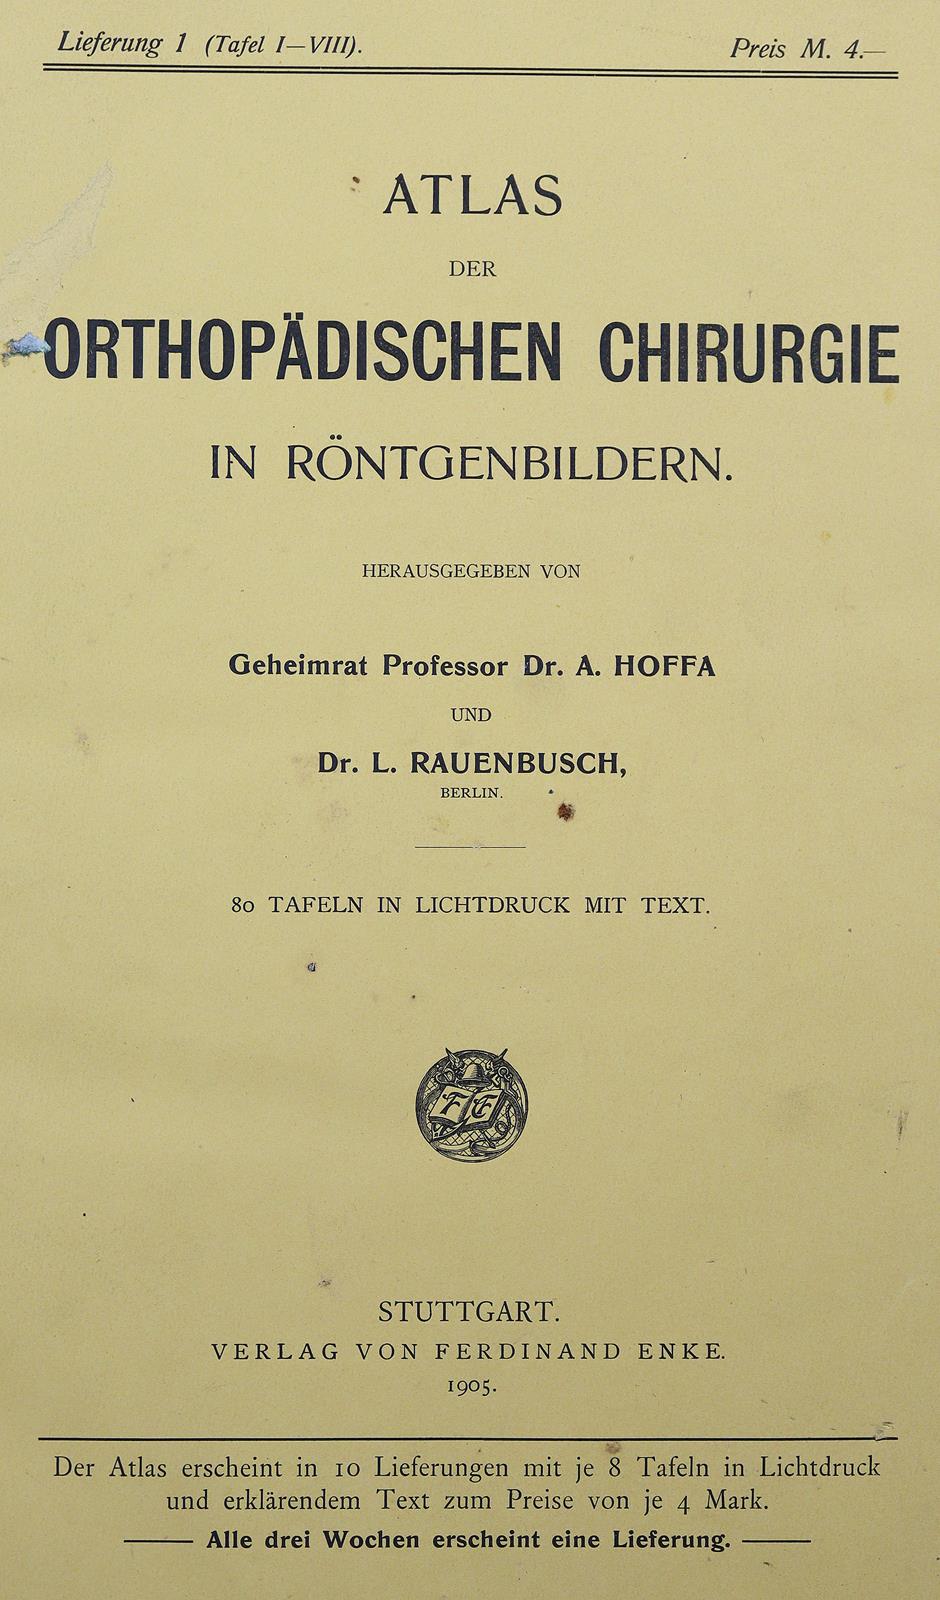 Hoffa,A. u. L.Rauenbusch. | Bild Nr.1